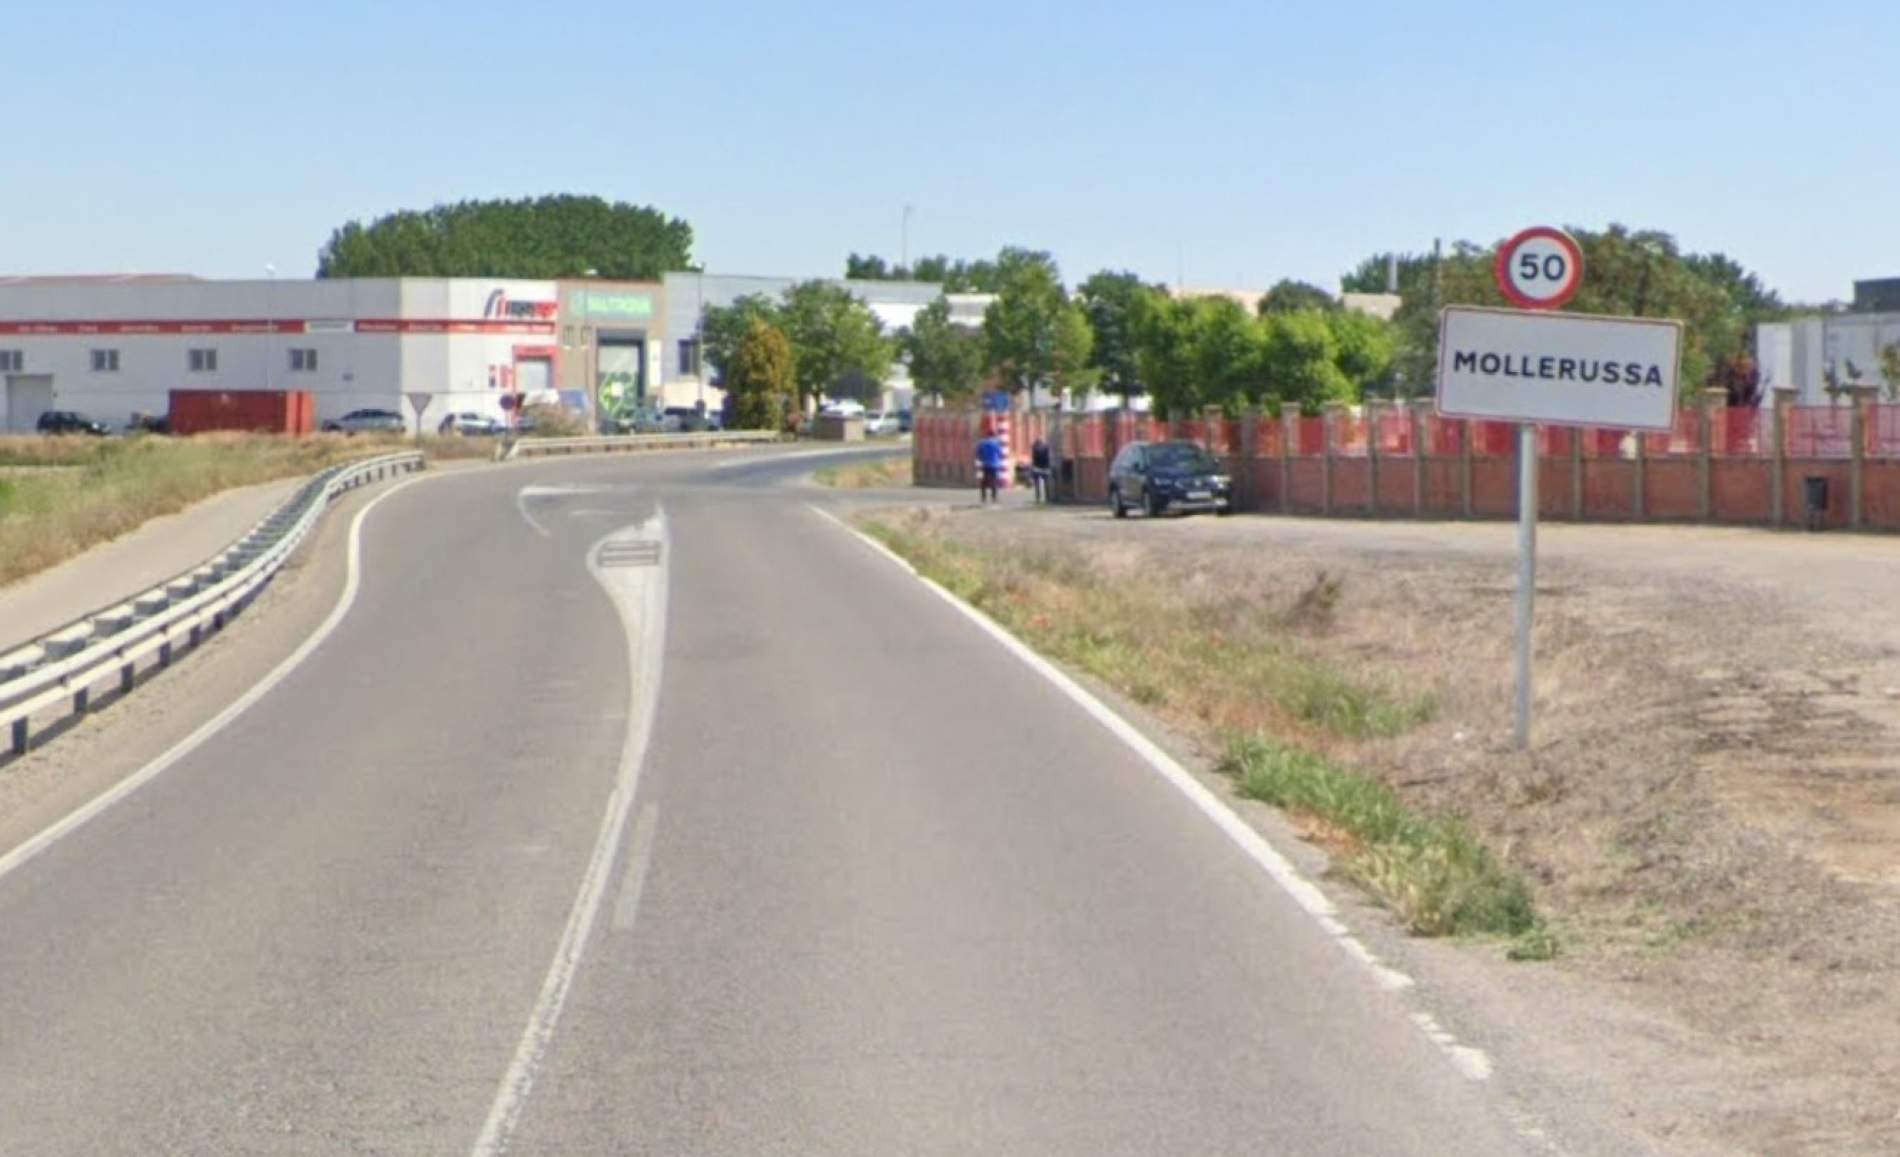 Molerussa accident mortal google street view